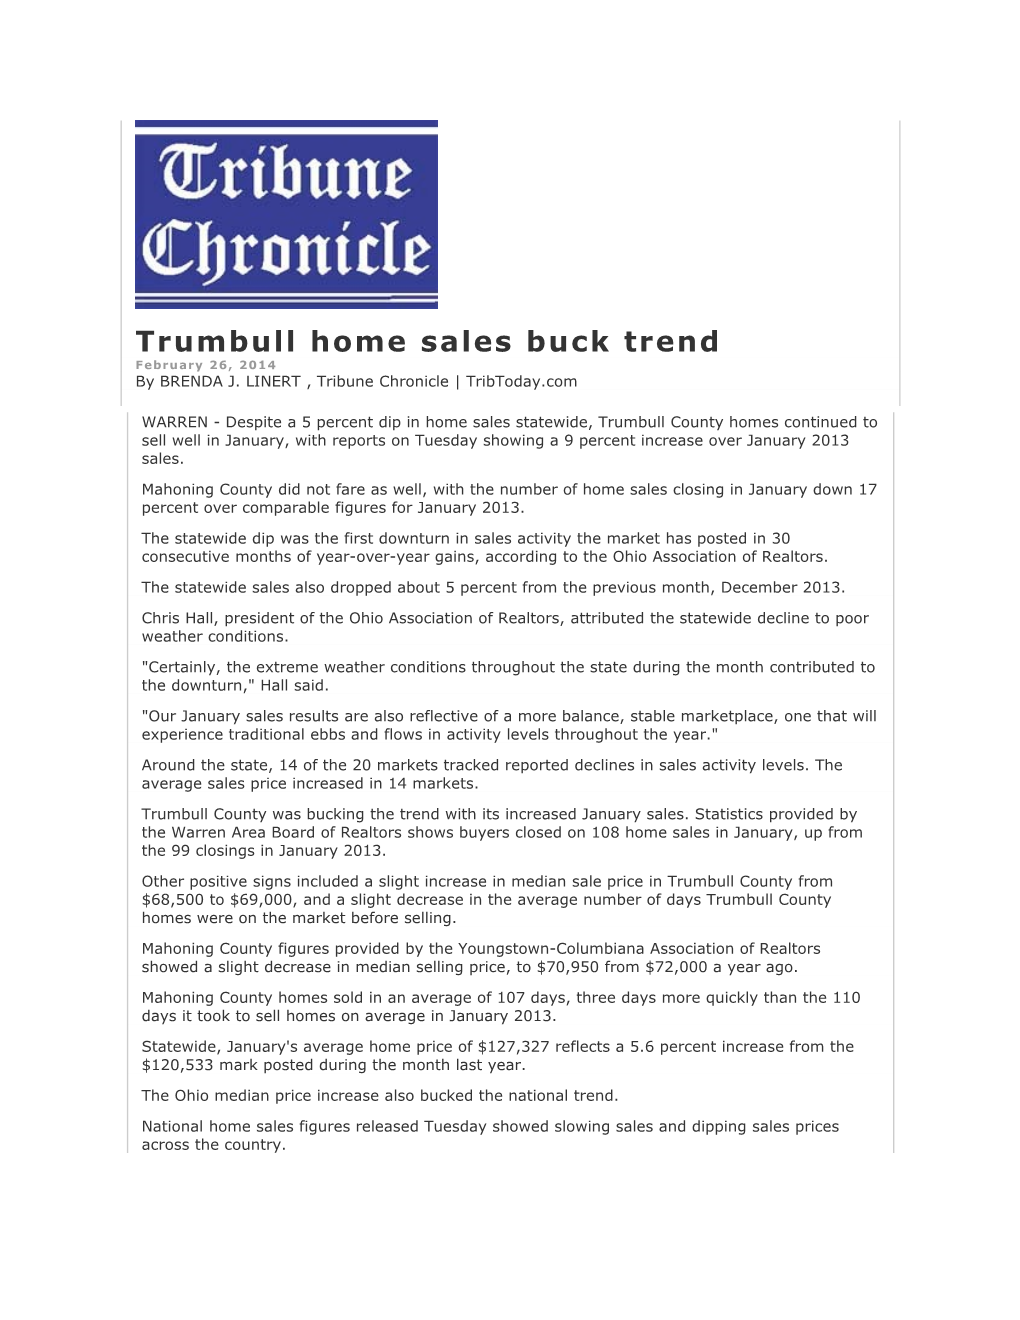 Trumbull Home Sales Buck Trend